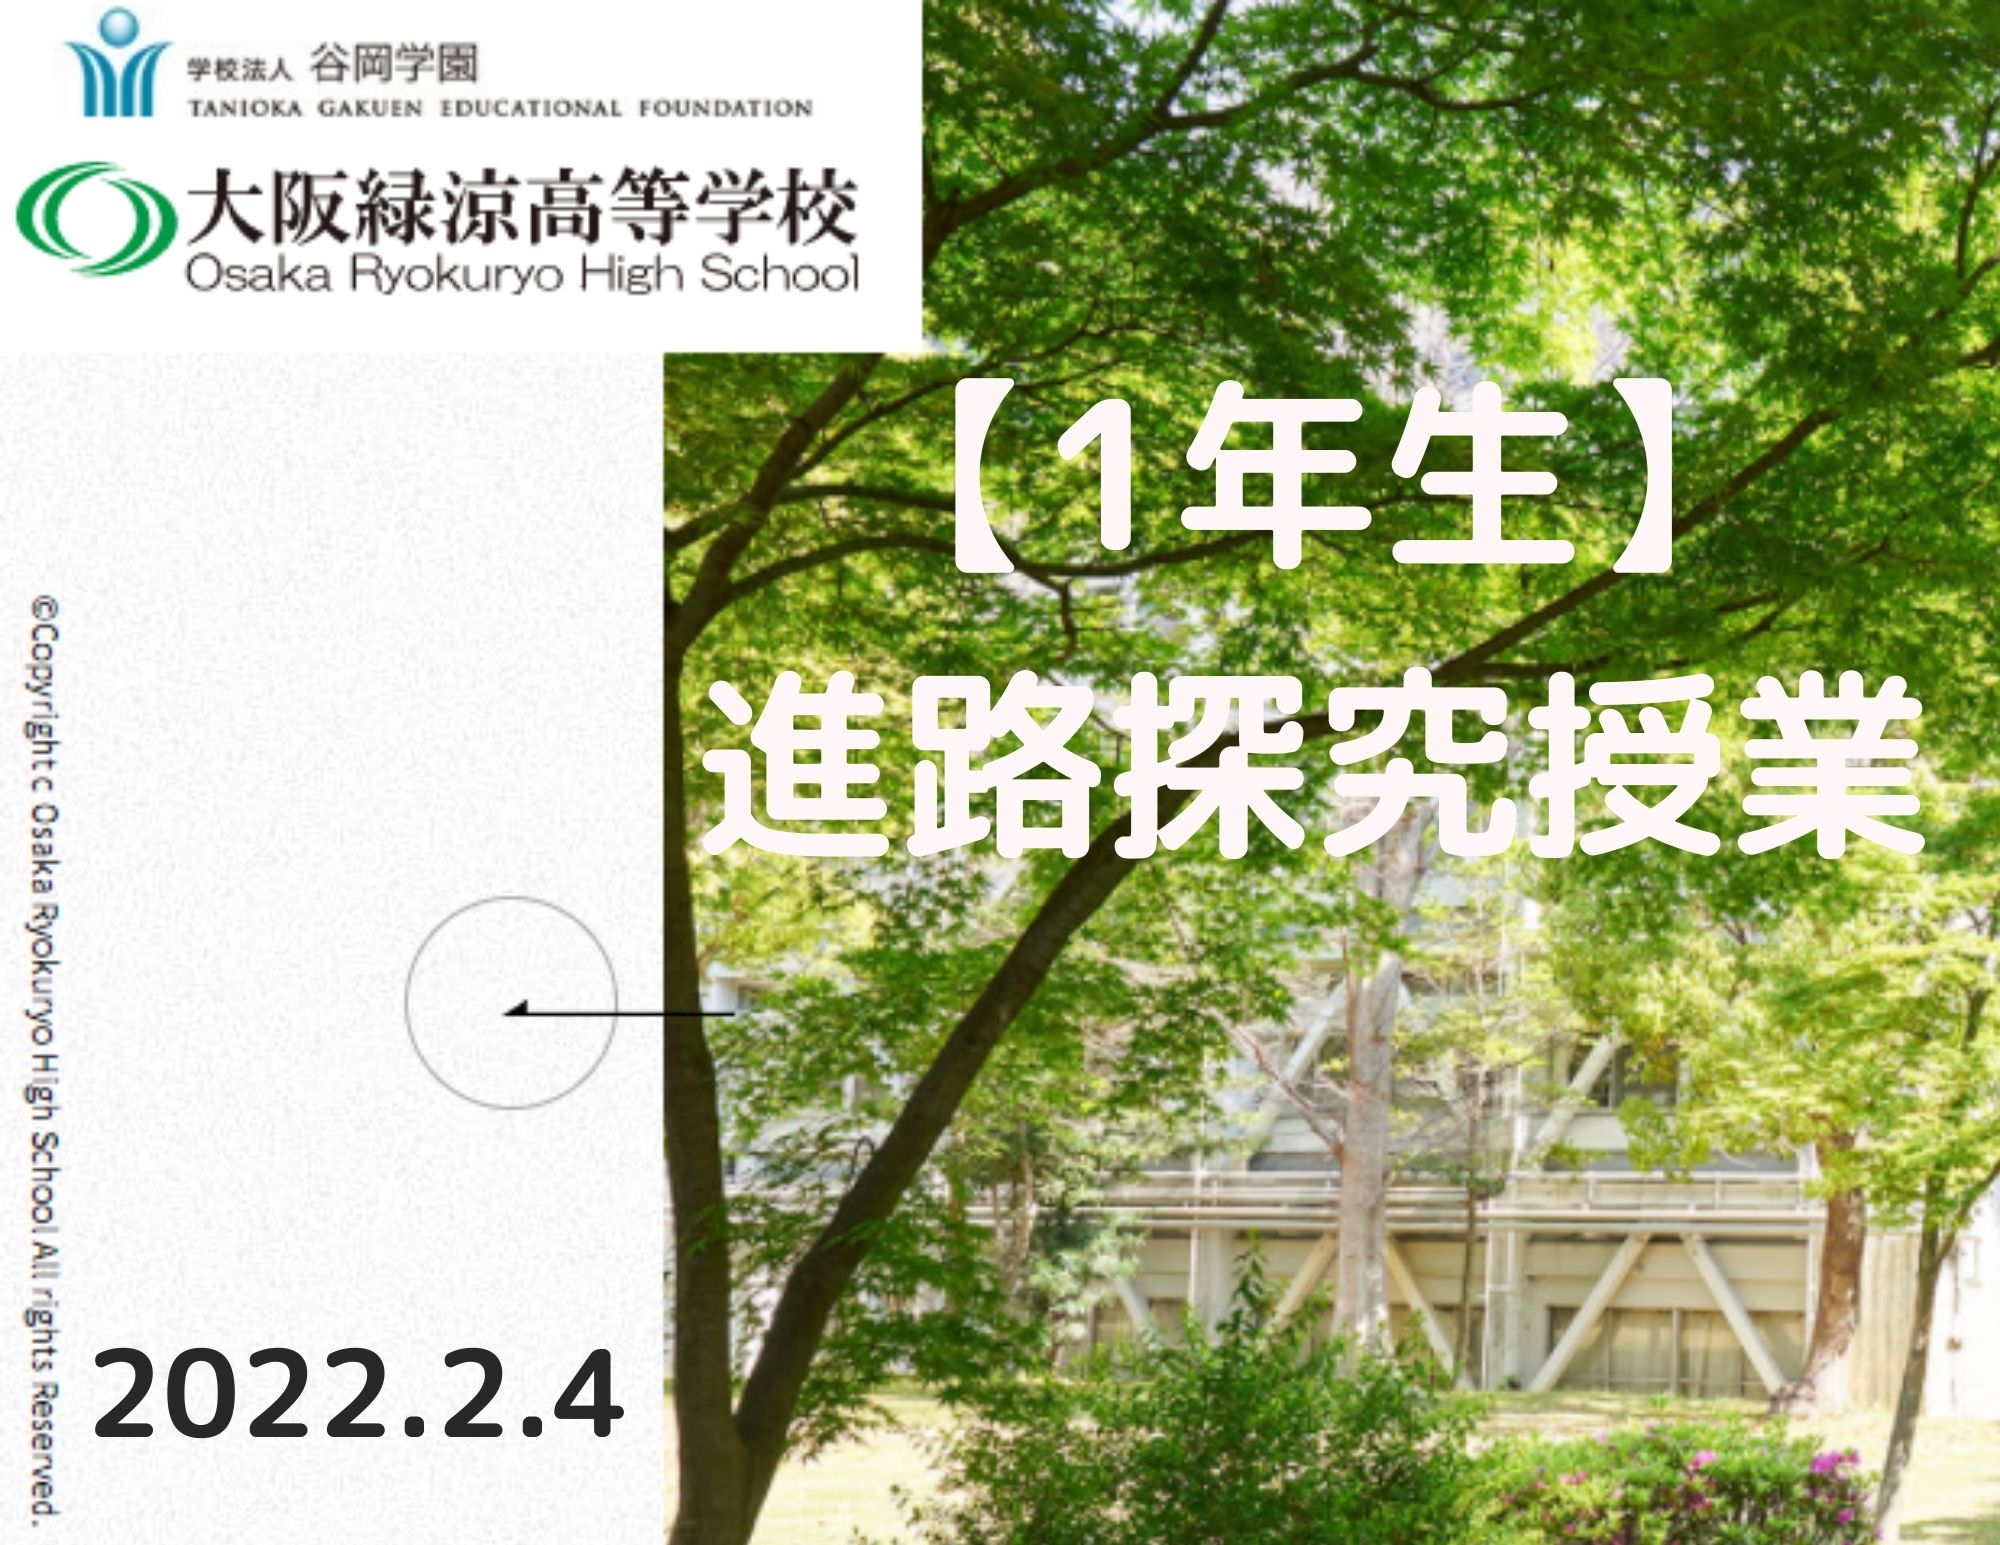 【出張授業】大阪緑涼高校1年生への進路探究授業